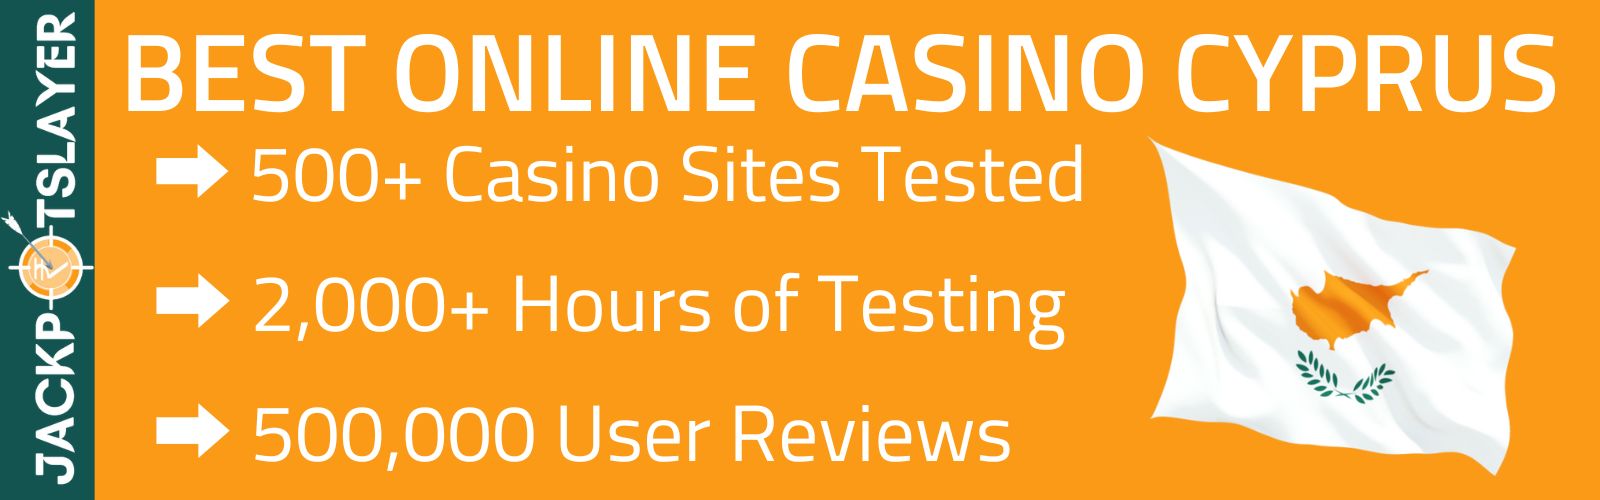 Best Online Casino Cyprus